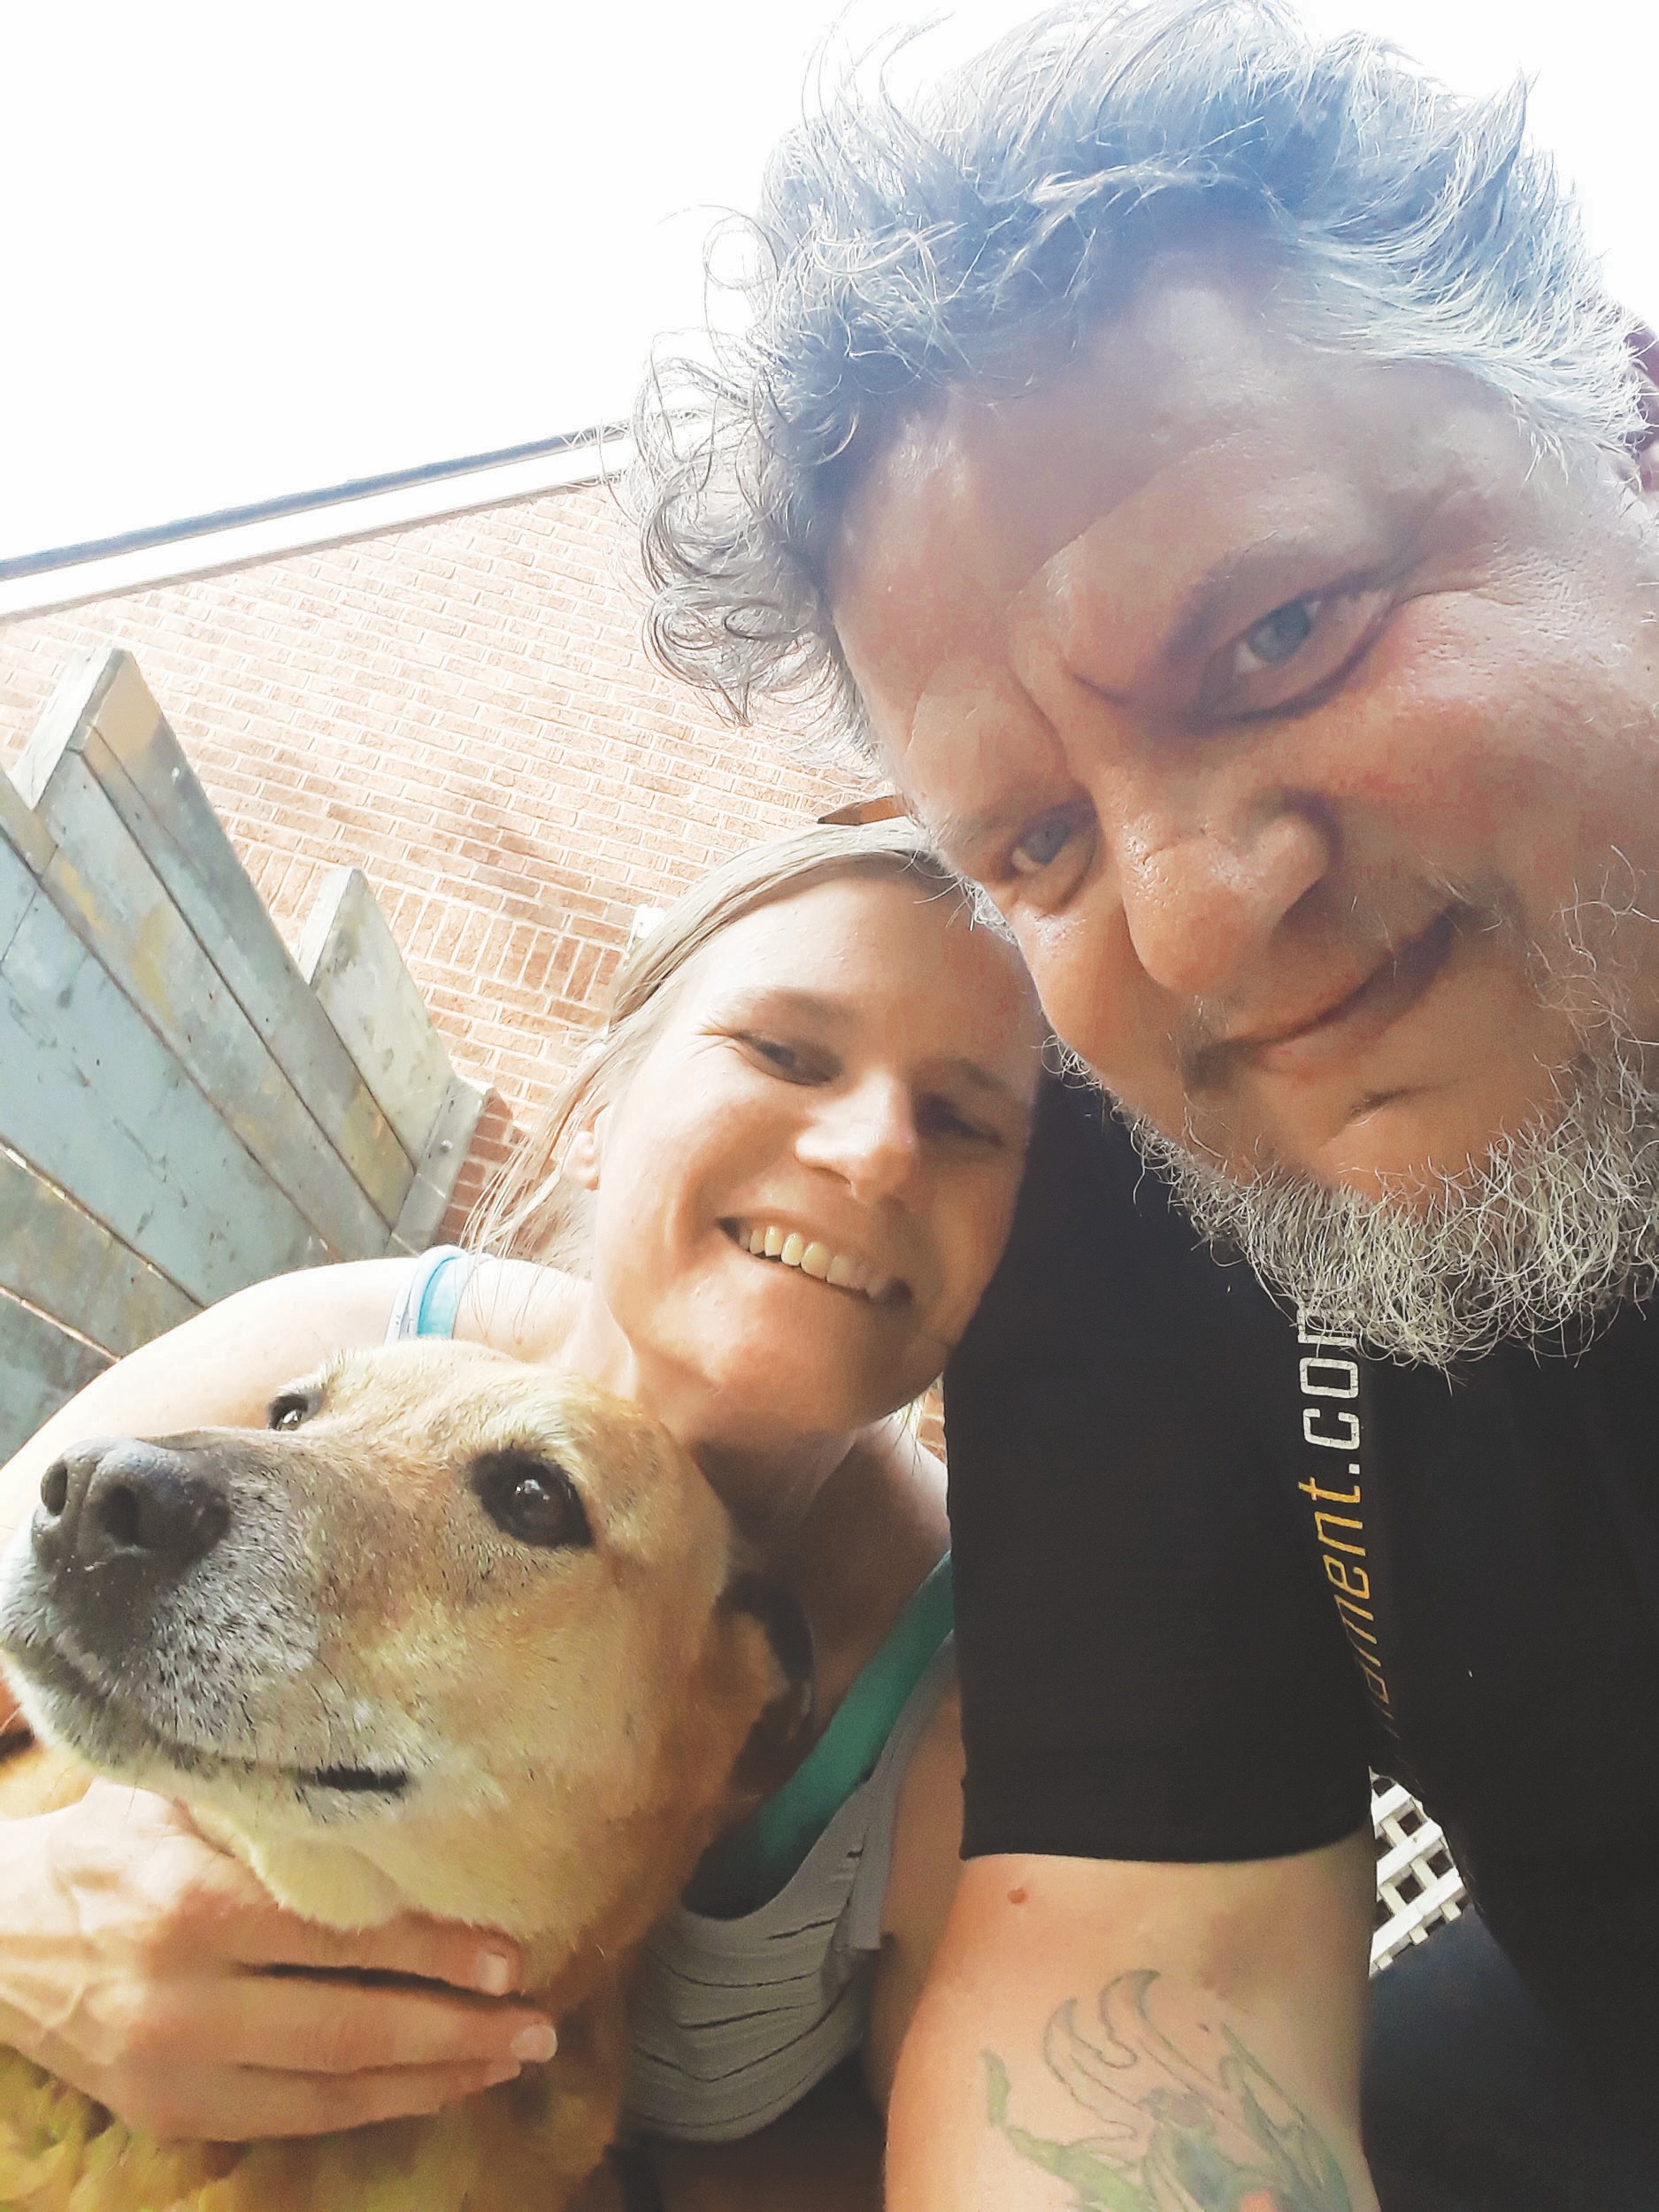 Shane Dickey, Gail Francis, and their dog